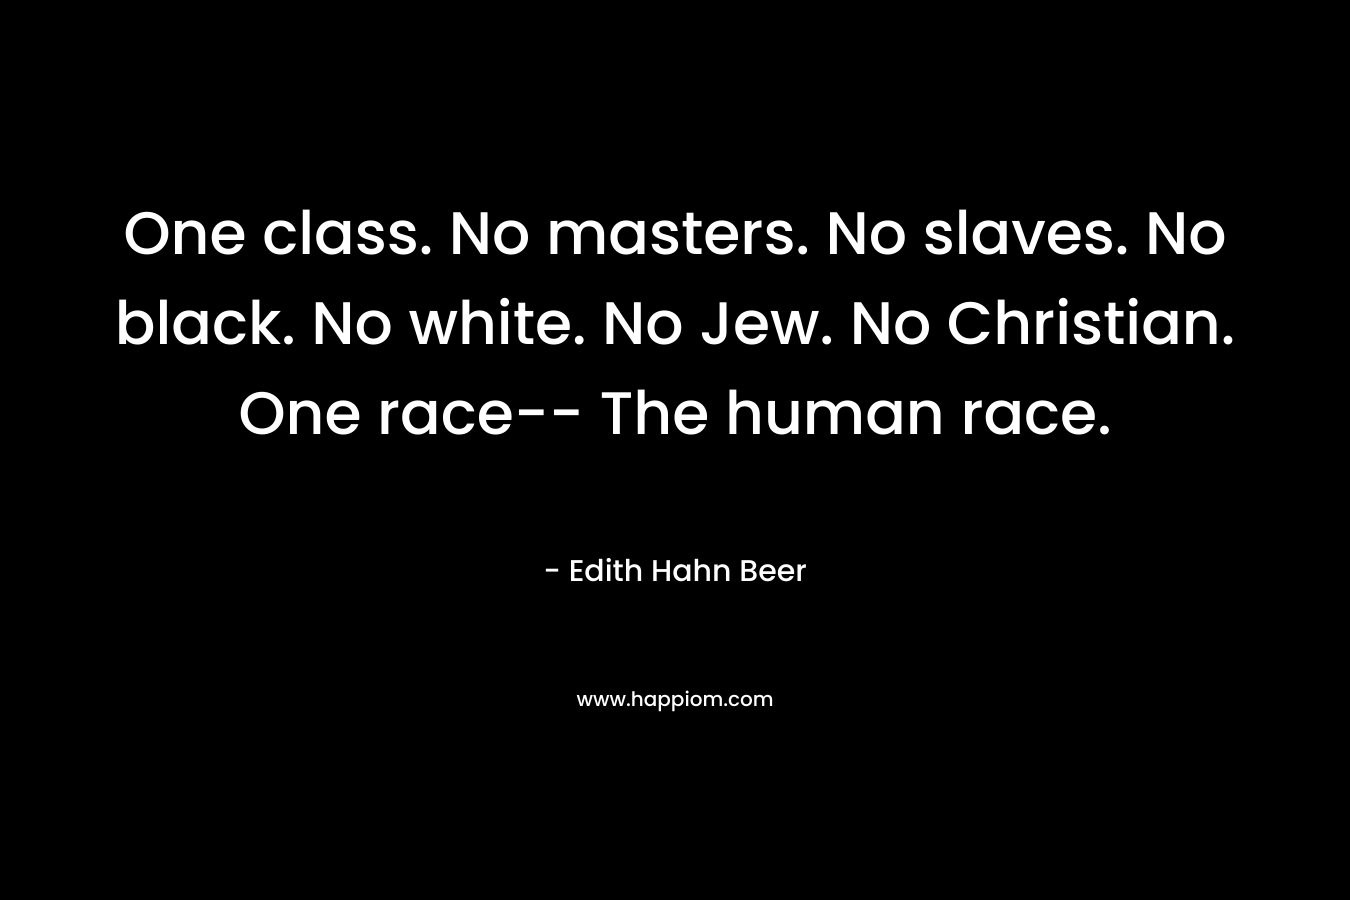 One class. No masters. No slaves. No black. No white. No Jew. No Christian. One race-- The human race.